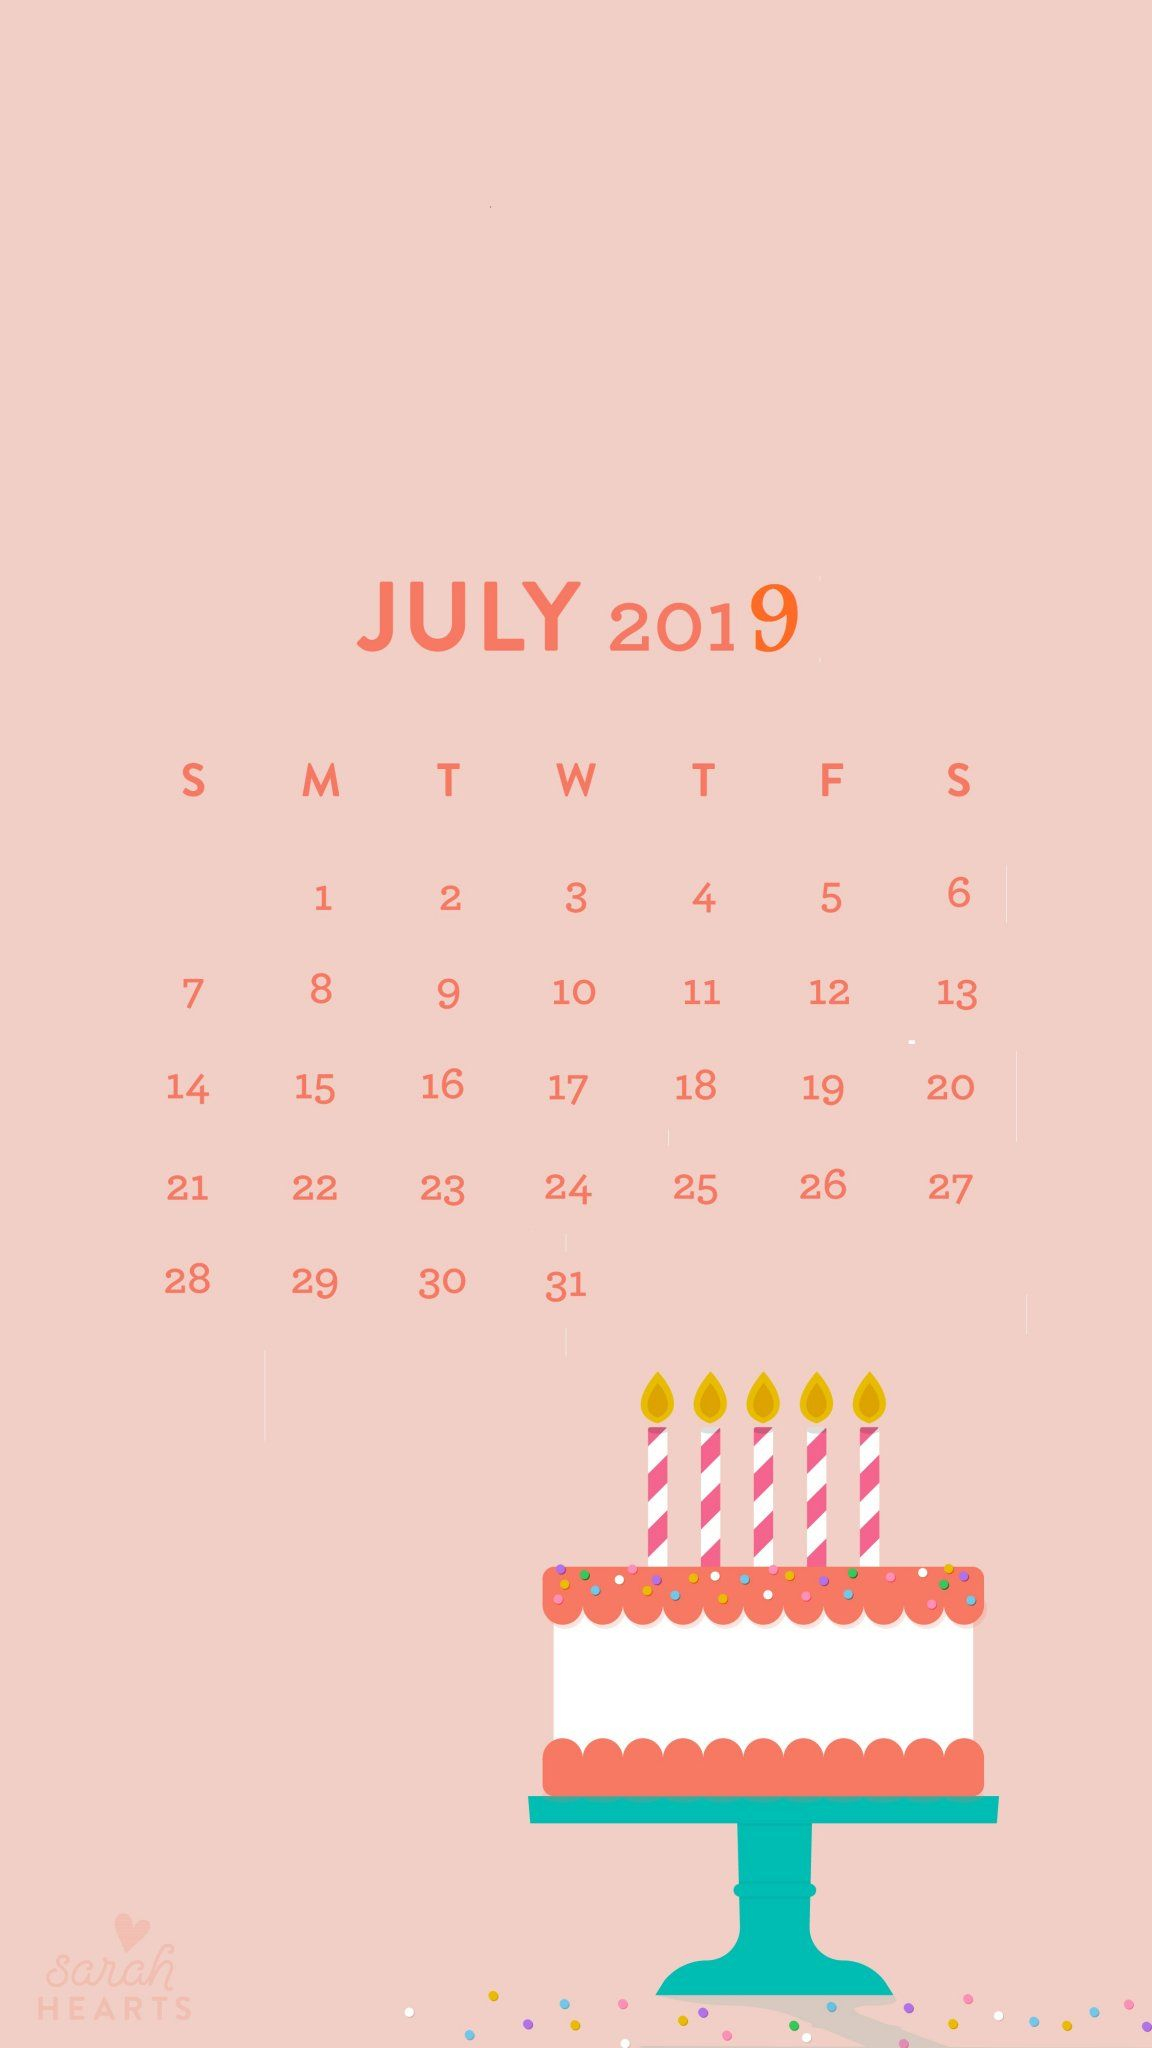 July 2019 Iphone Calendar Wallpaper #july #july2019Calendar